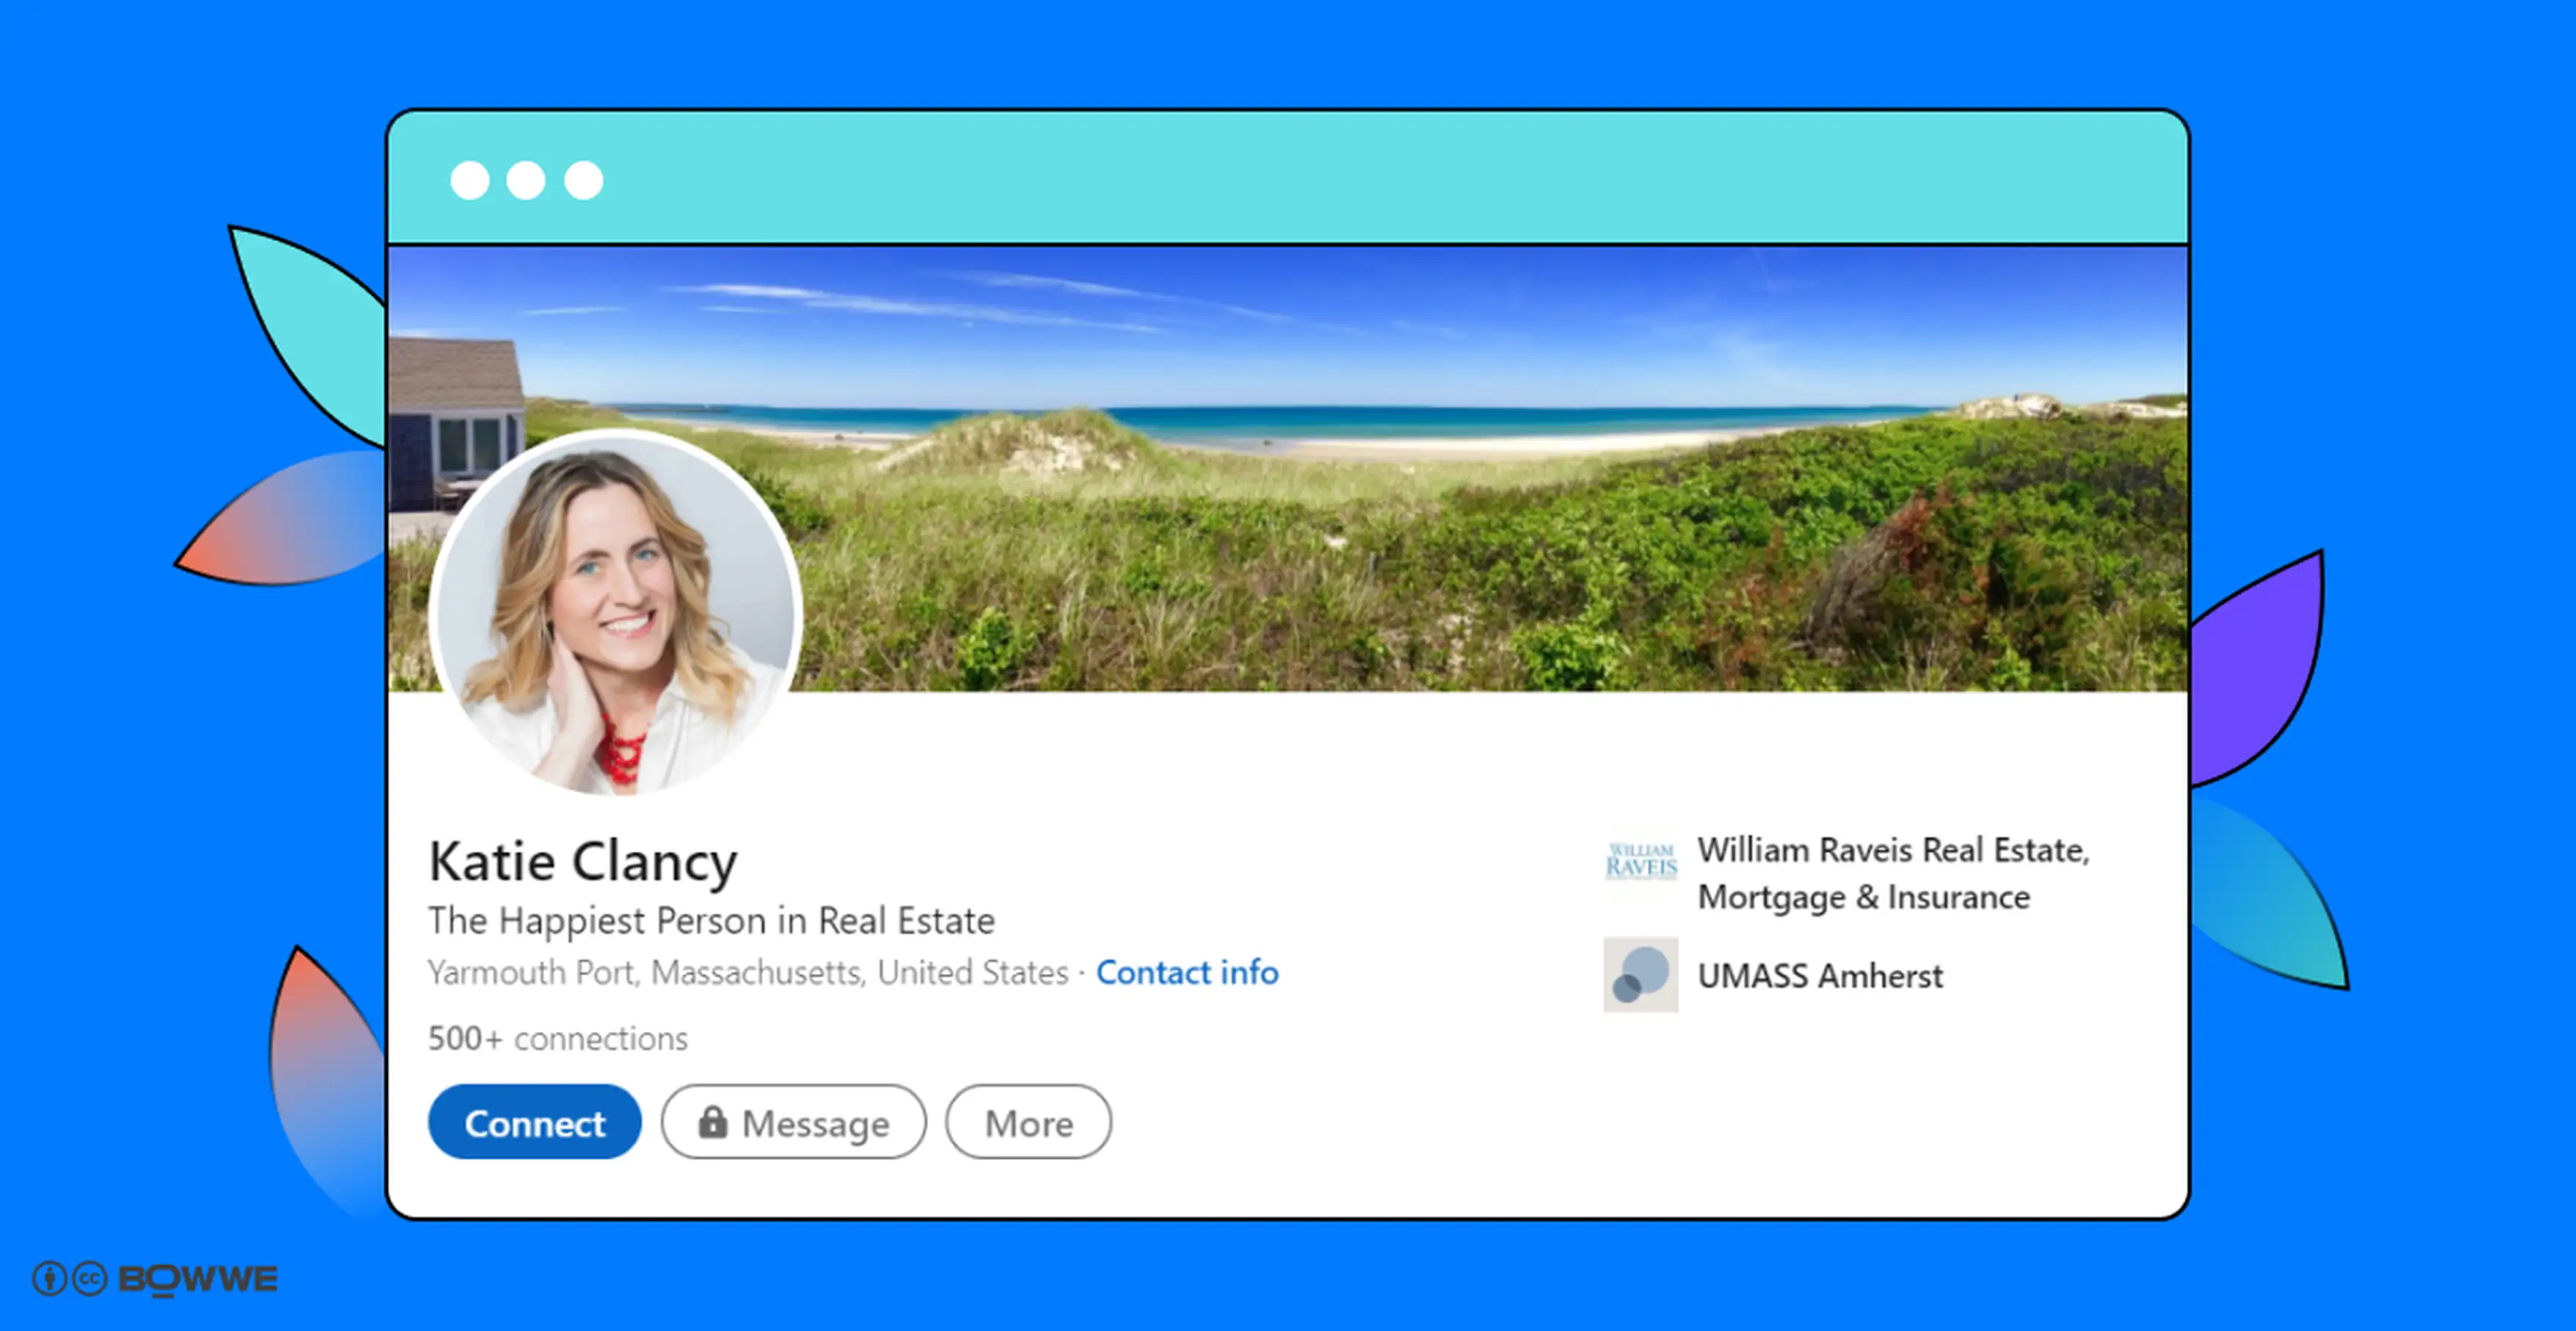 Katie Clancy's LinkedIn profile